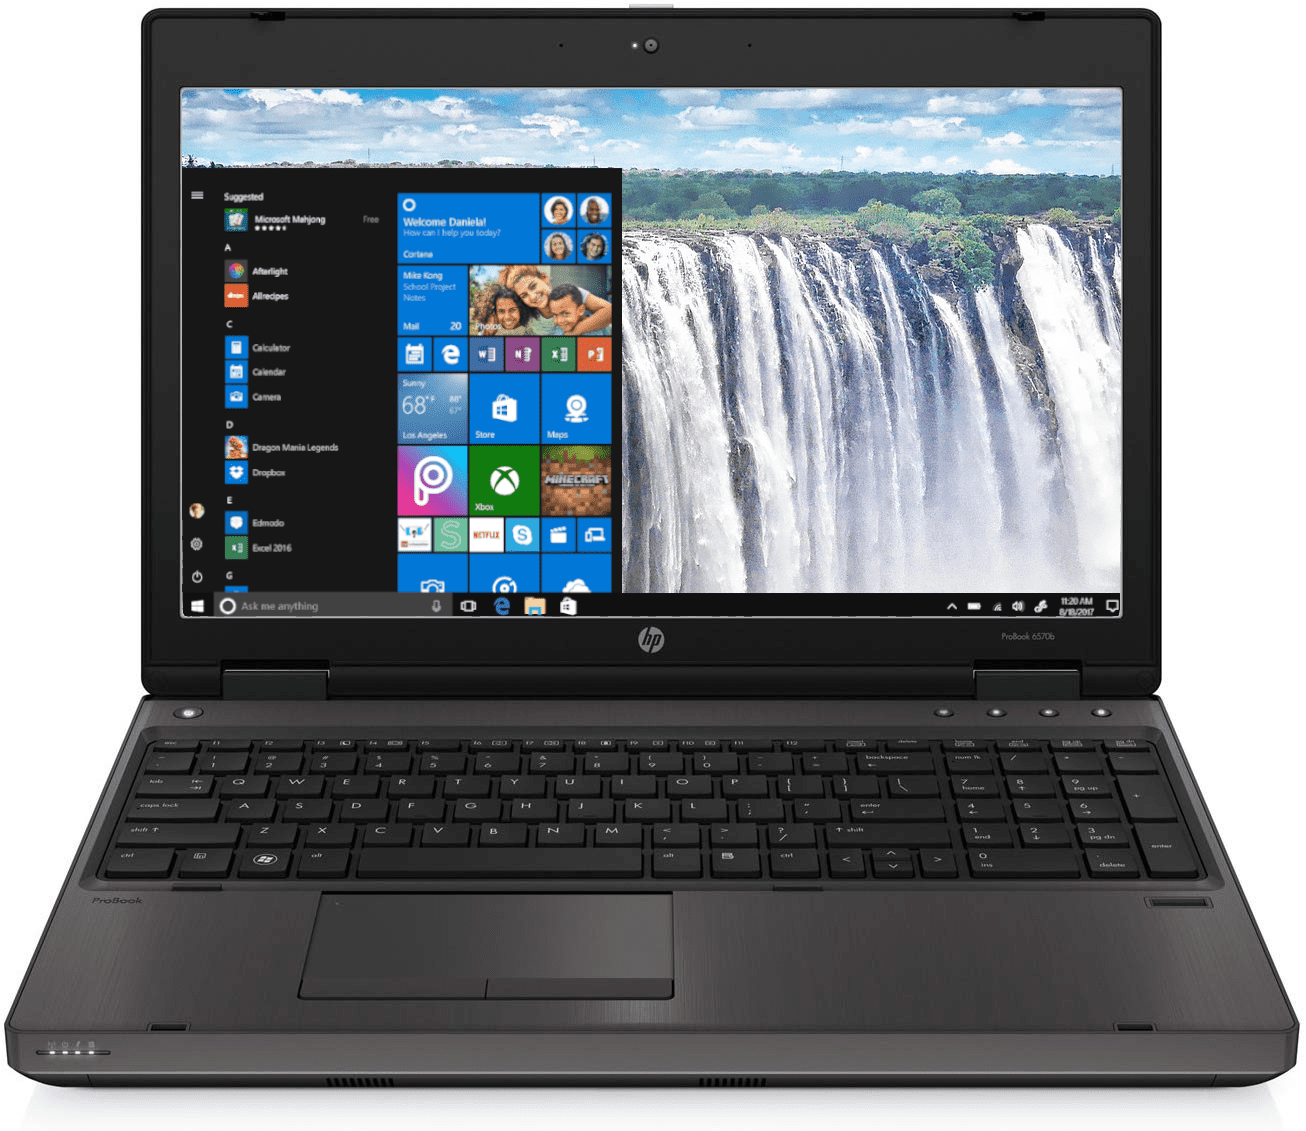 HP ProBook 6570b - 15.6" - Core i5 3230M 2.60 GHz - Windows 10 64-bit